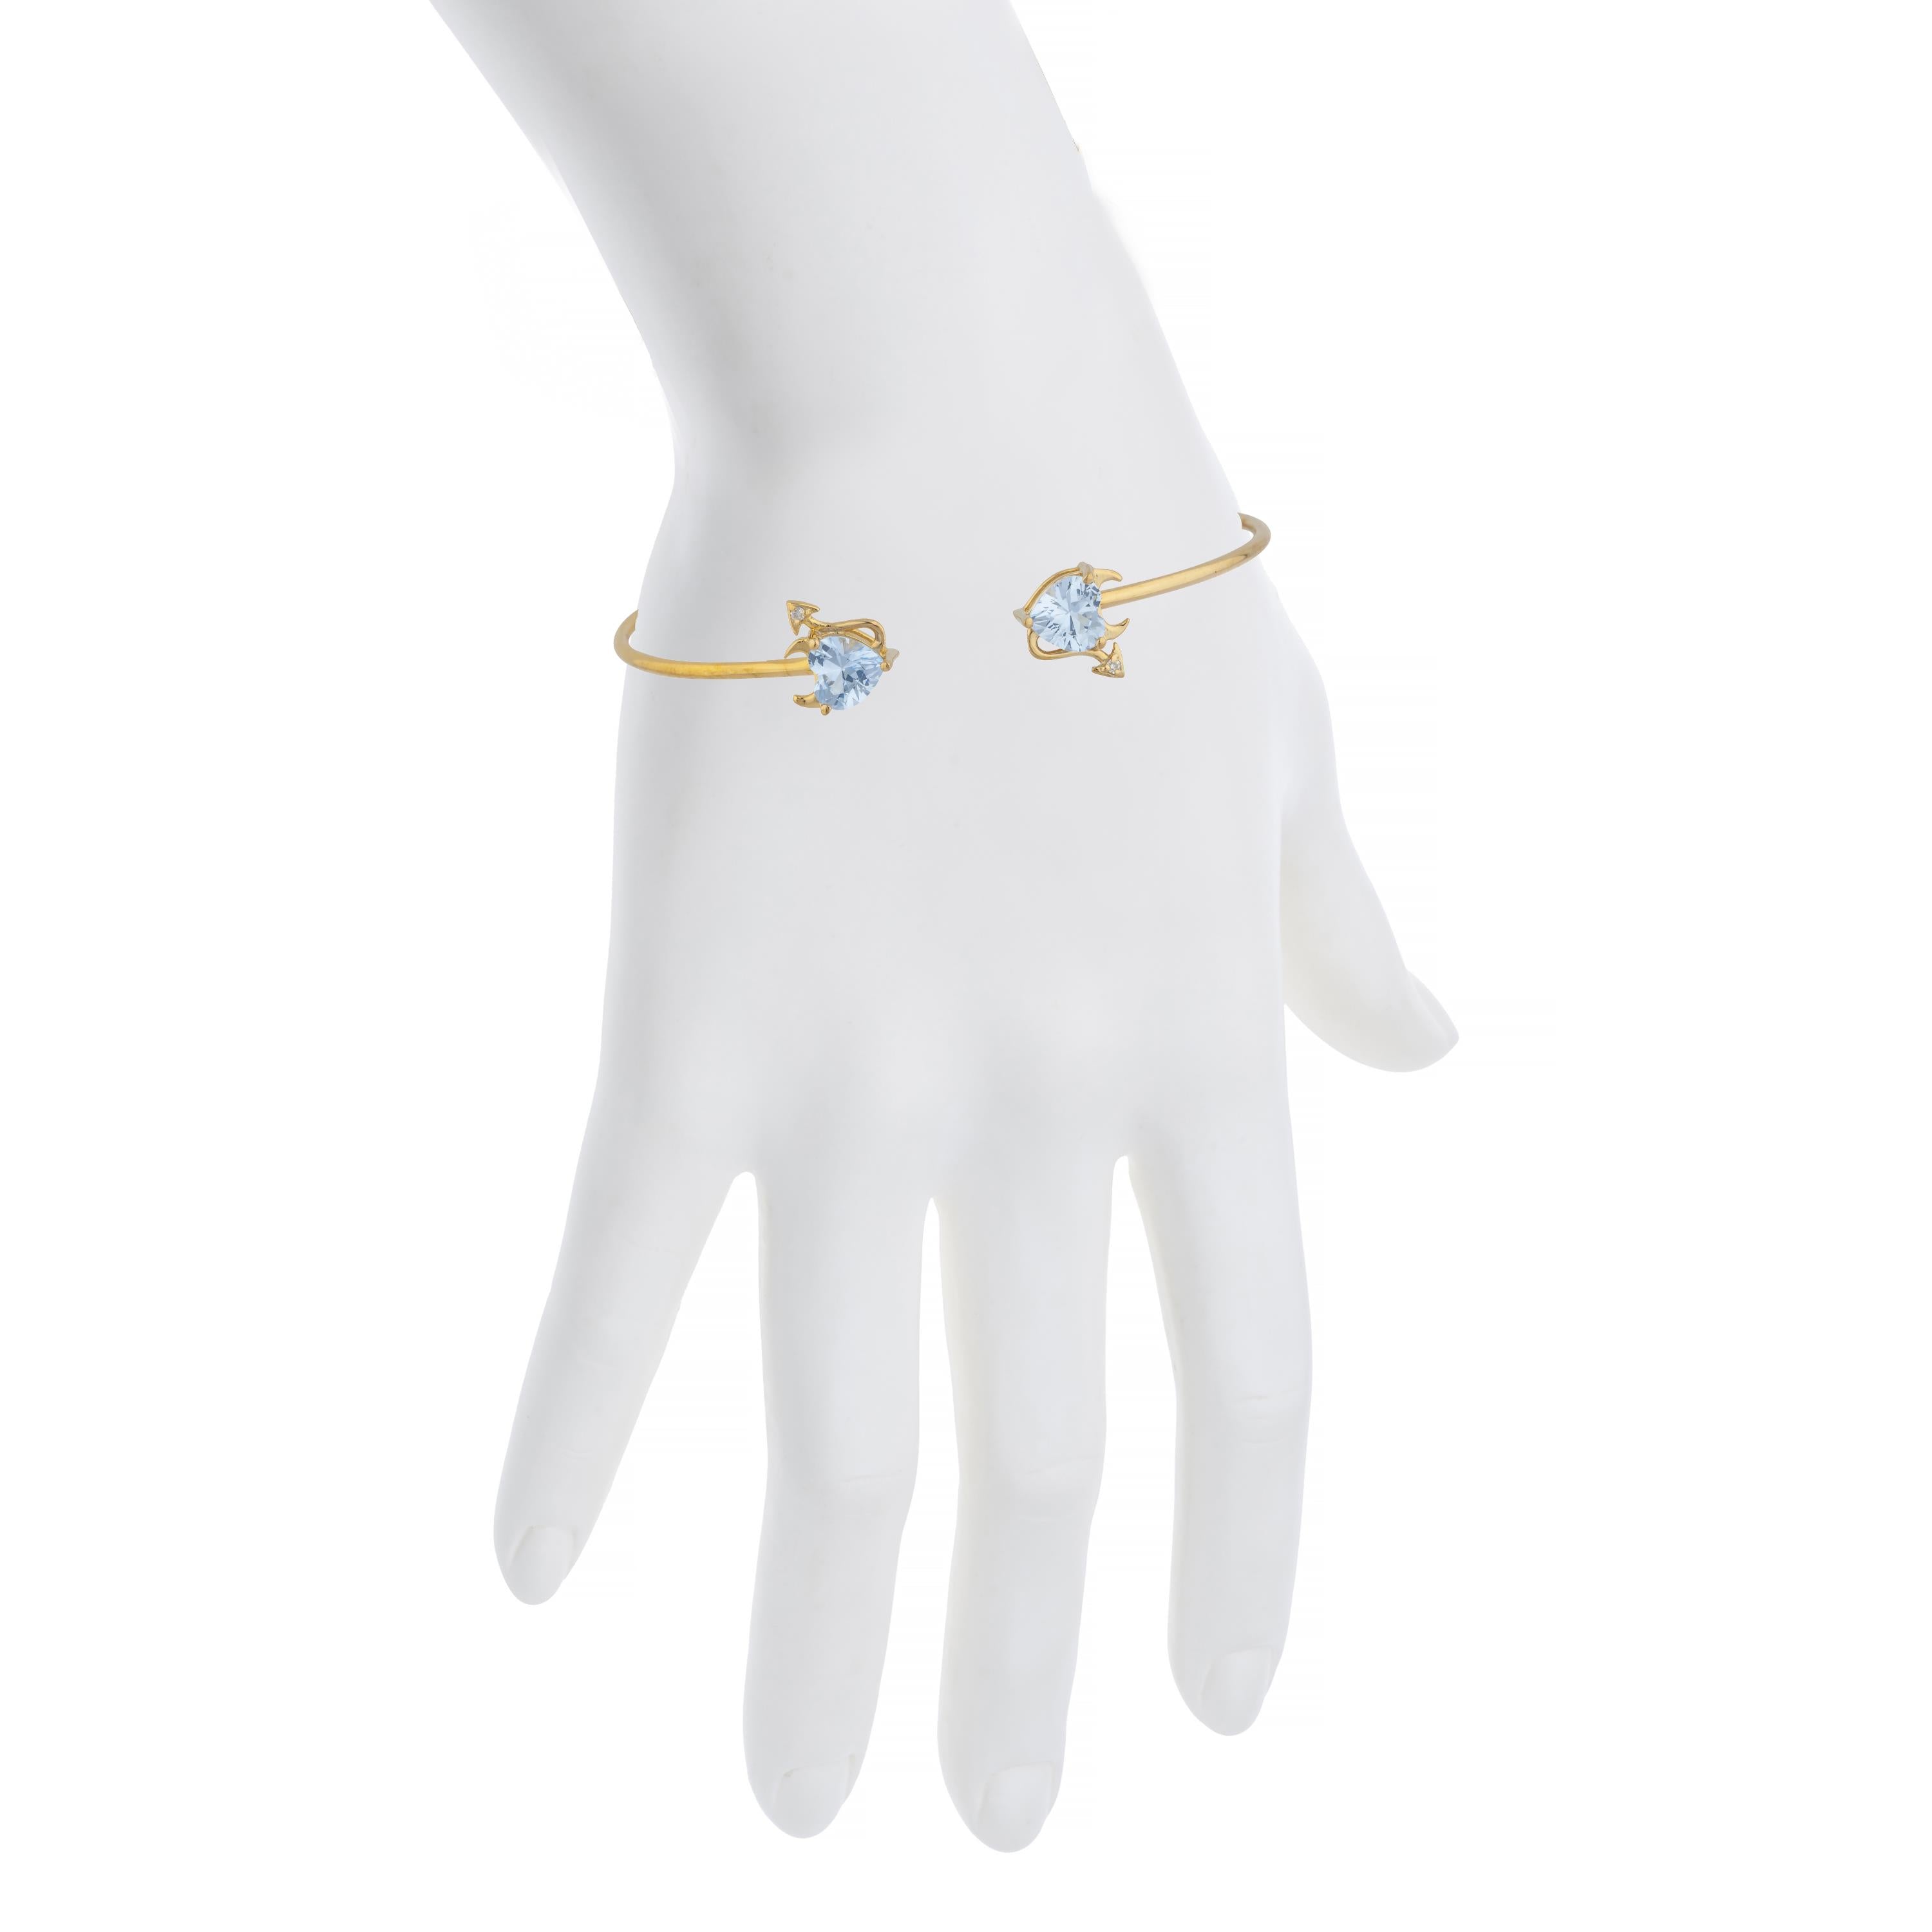 Genuine Aquamarine & Diamond Devil Heart Bangle Bracelet 14Kt Yellow Gold Rose Gold Silver